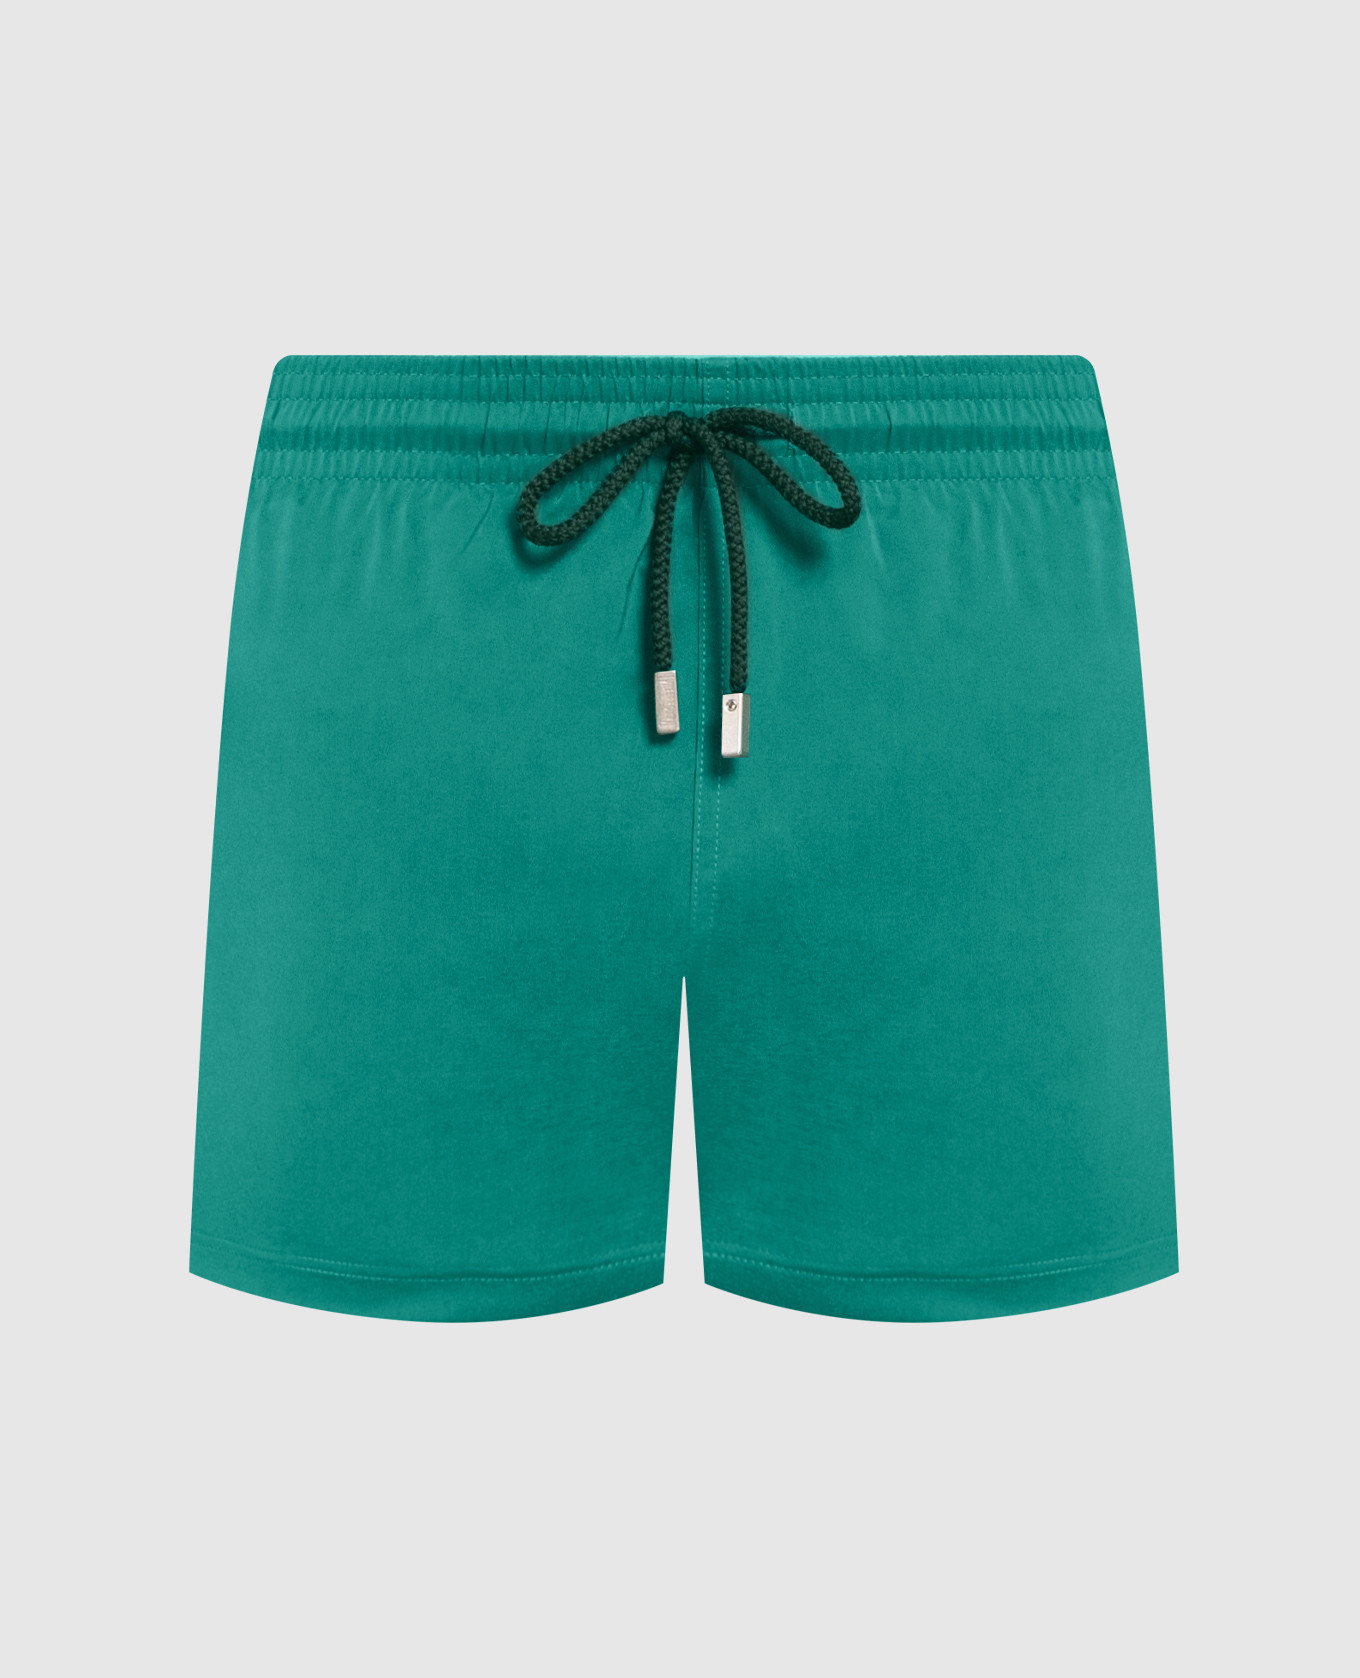 Green Moorea swim shorts